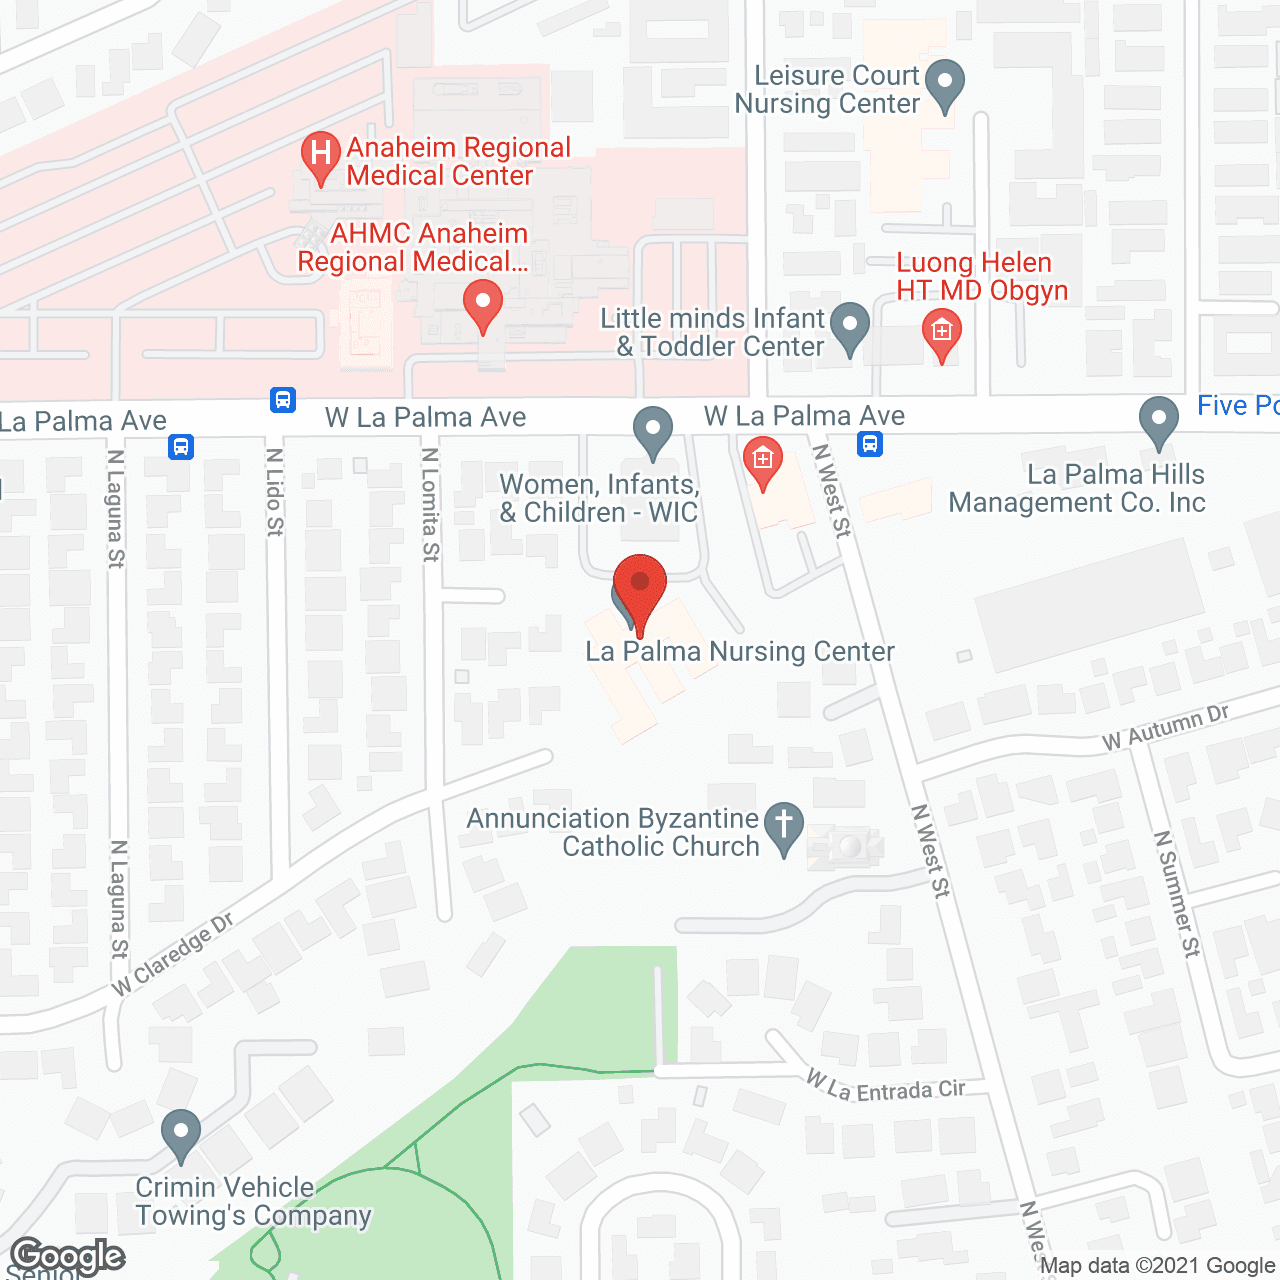 La Palma Nursing Center in google map